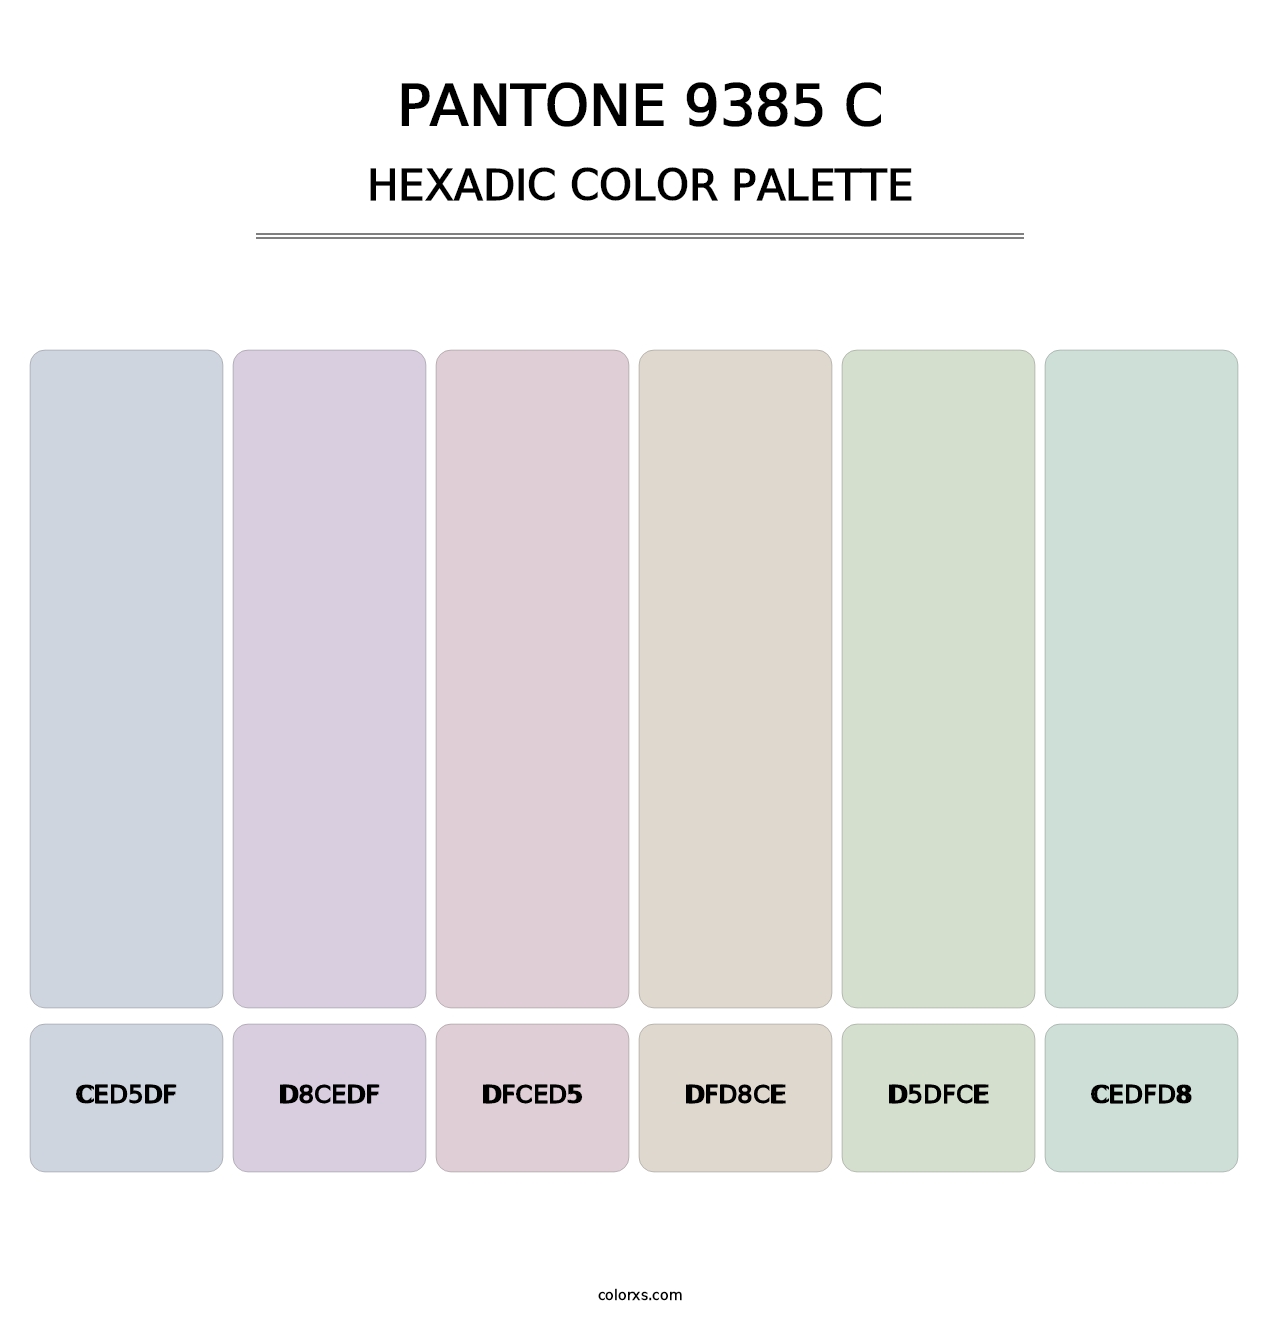 PANTONE 9385 C - Hexadic Color Palette